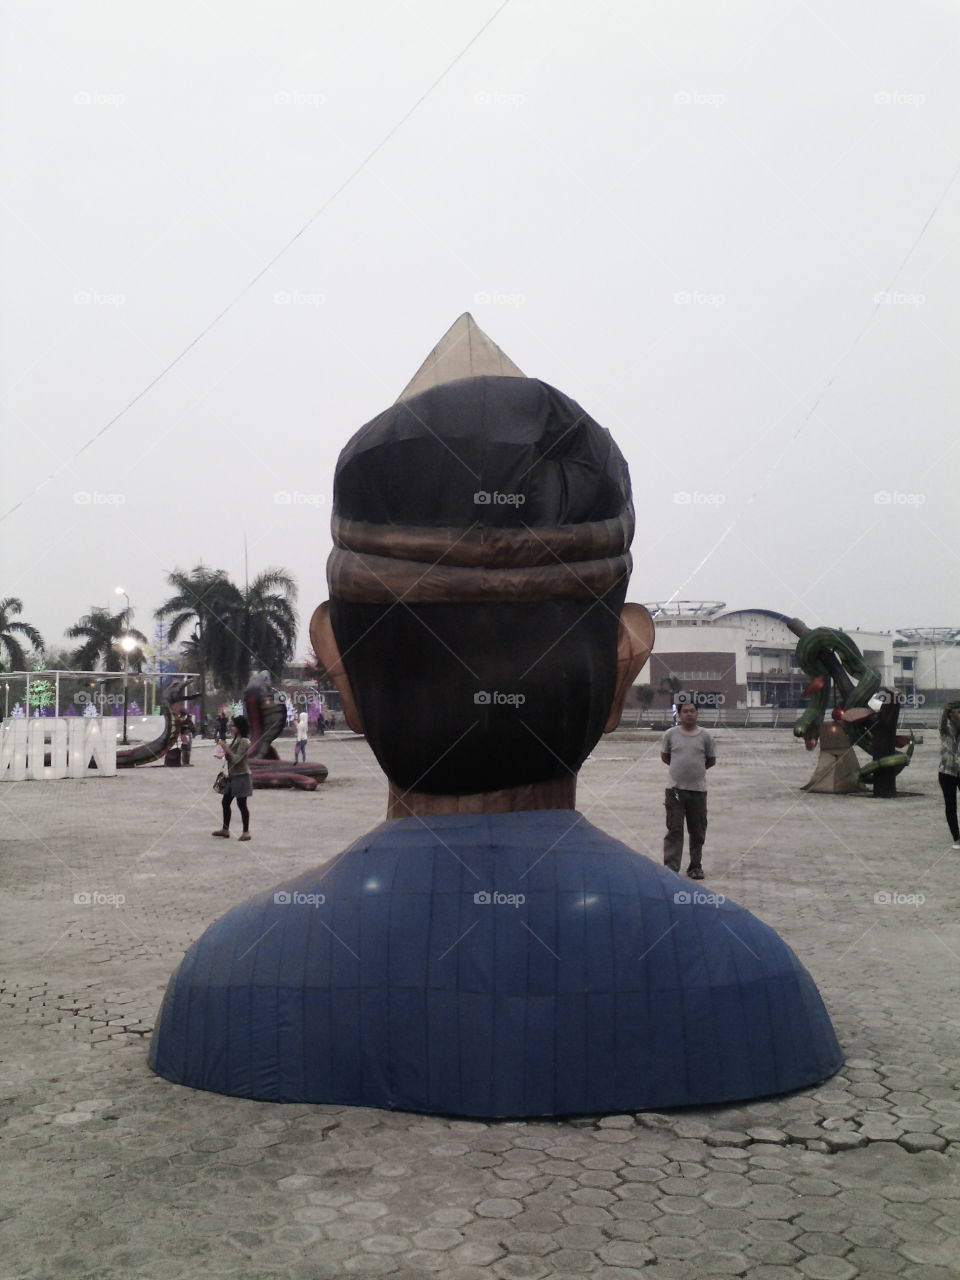 Giant Form of a Man wearing traditional hat of Palembangnese called Tanjak in Jakabaring Palembang